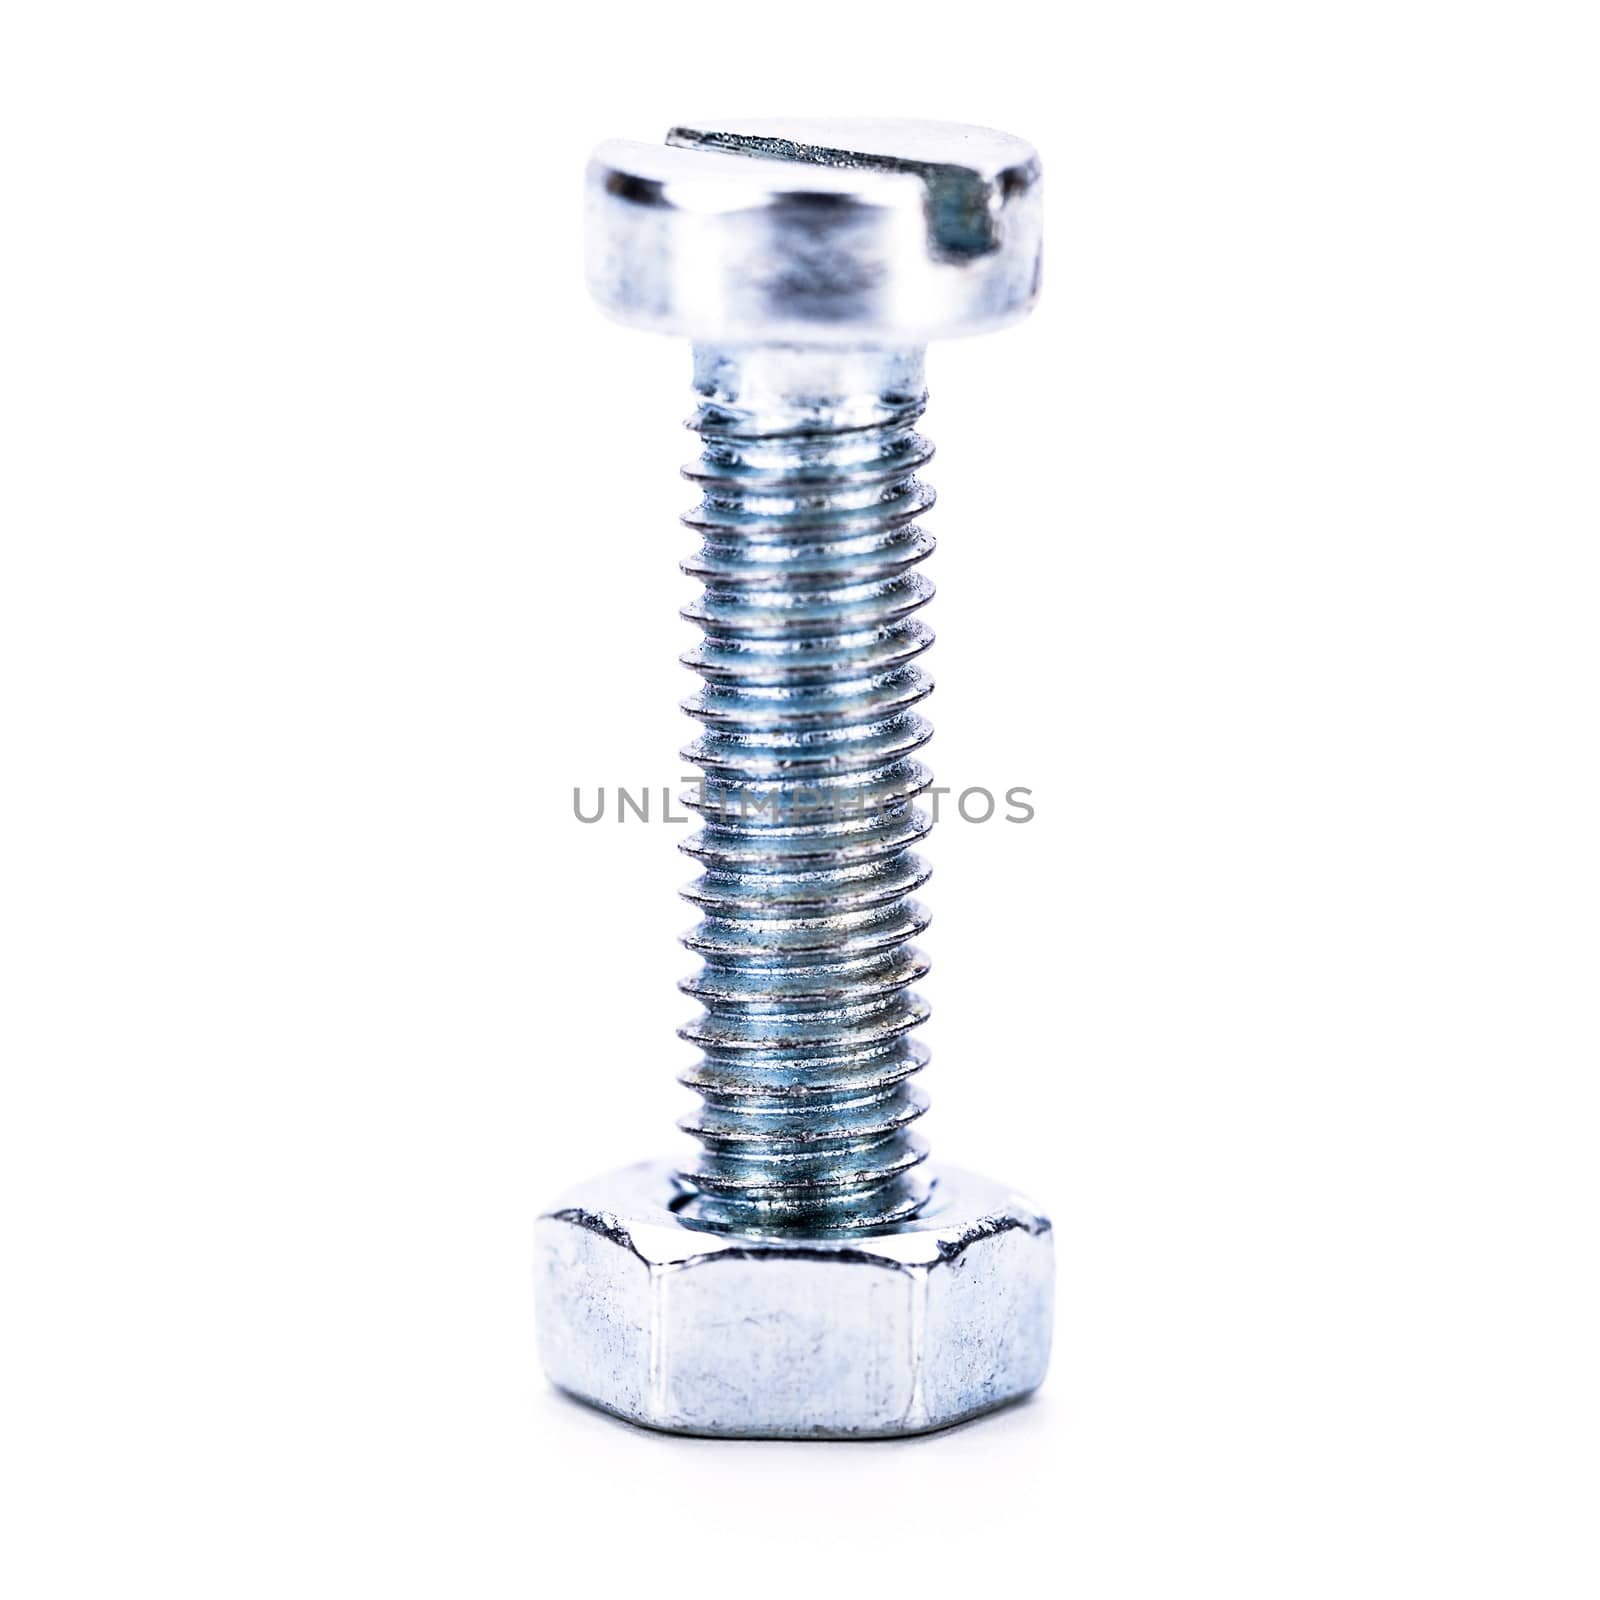 silver steel hexagonal screw tool objects macro metal industry